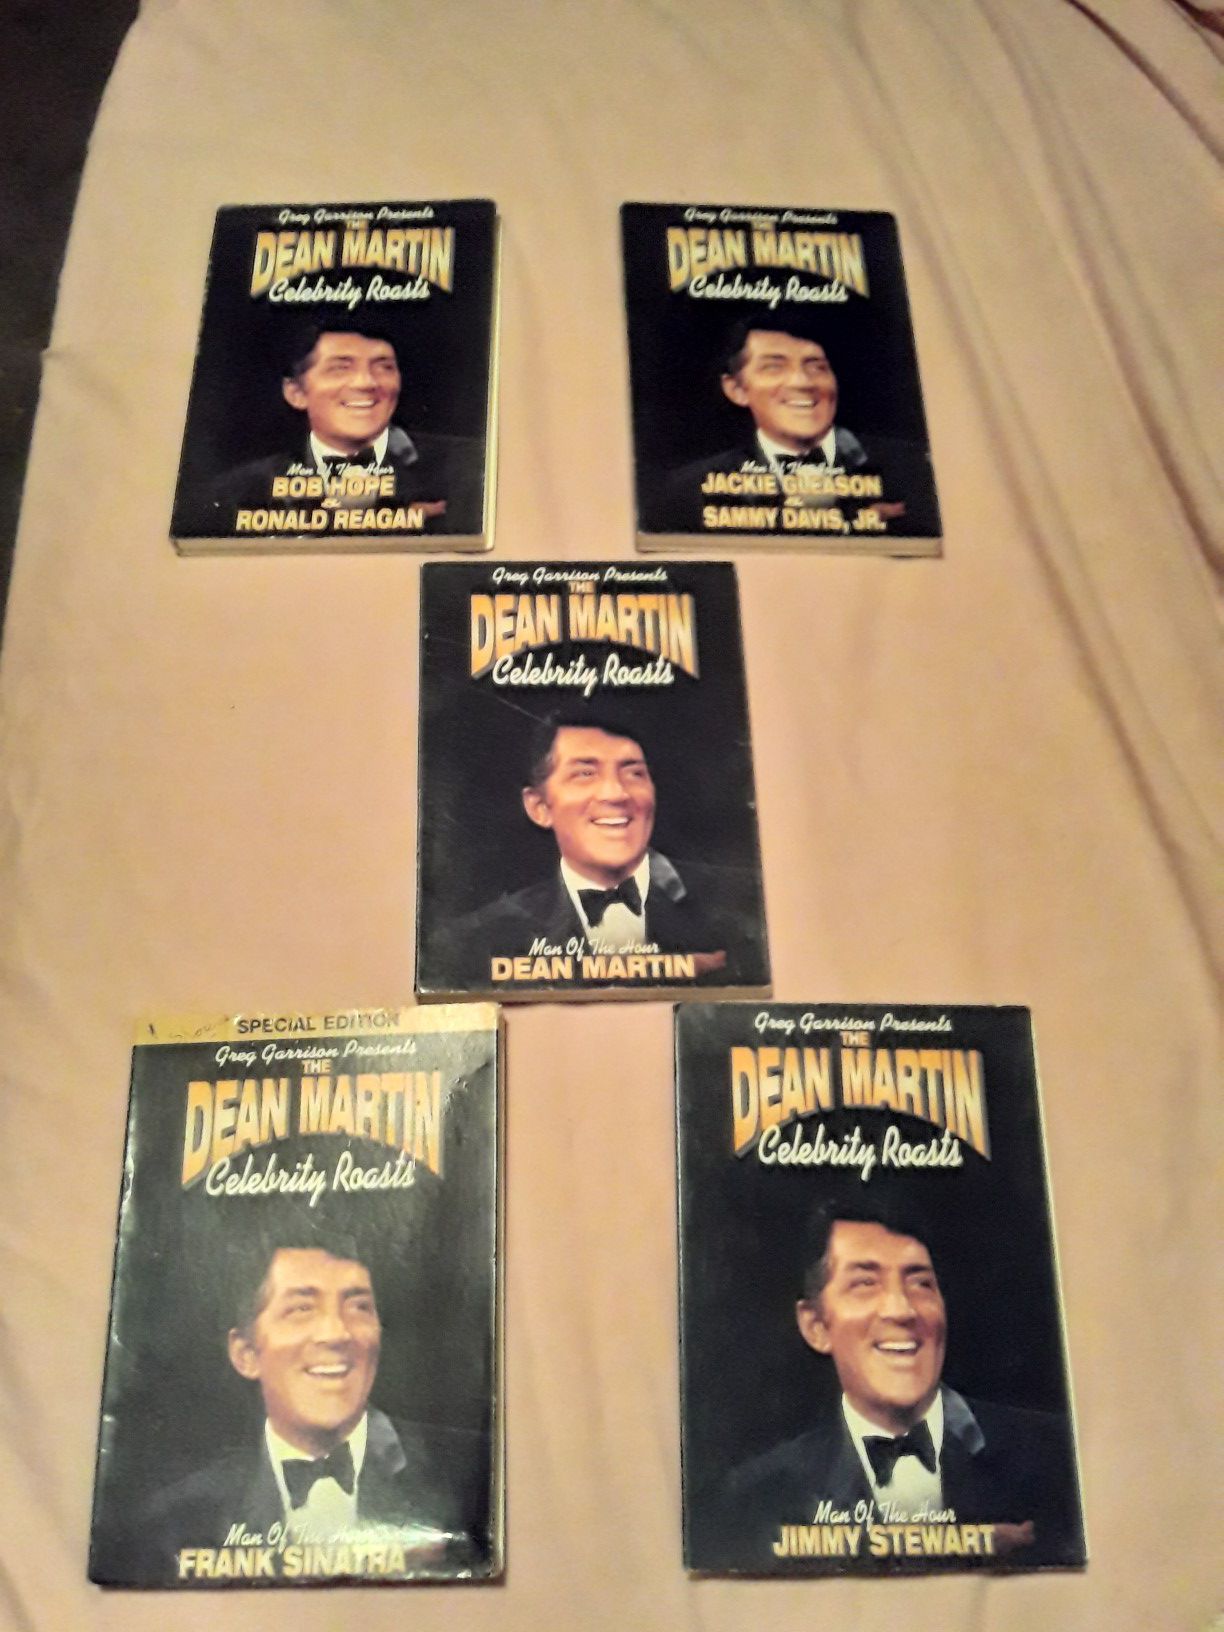 5 Dean Martin Celebrity Roasts DVD Set, Brand New